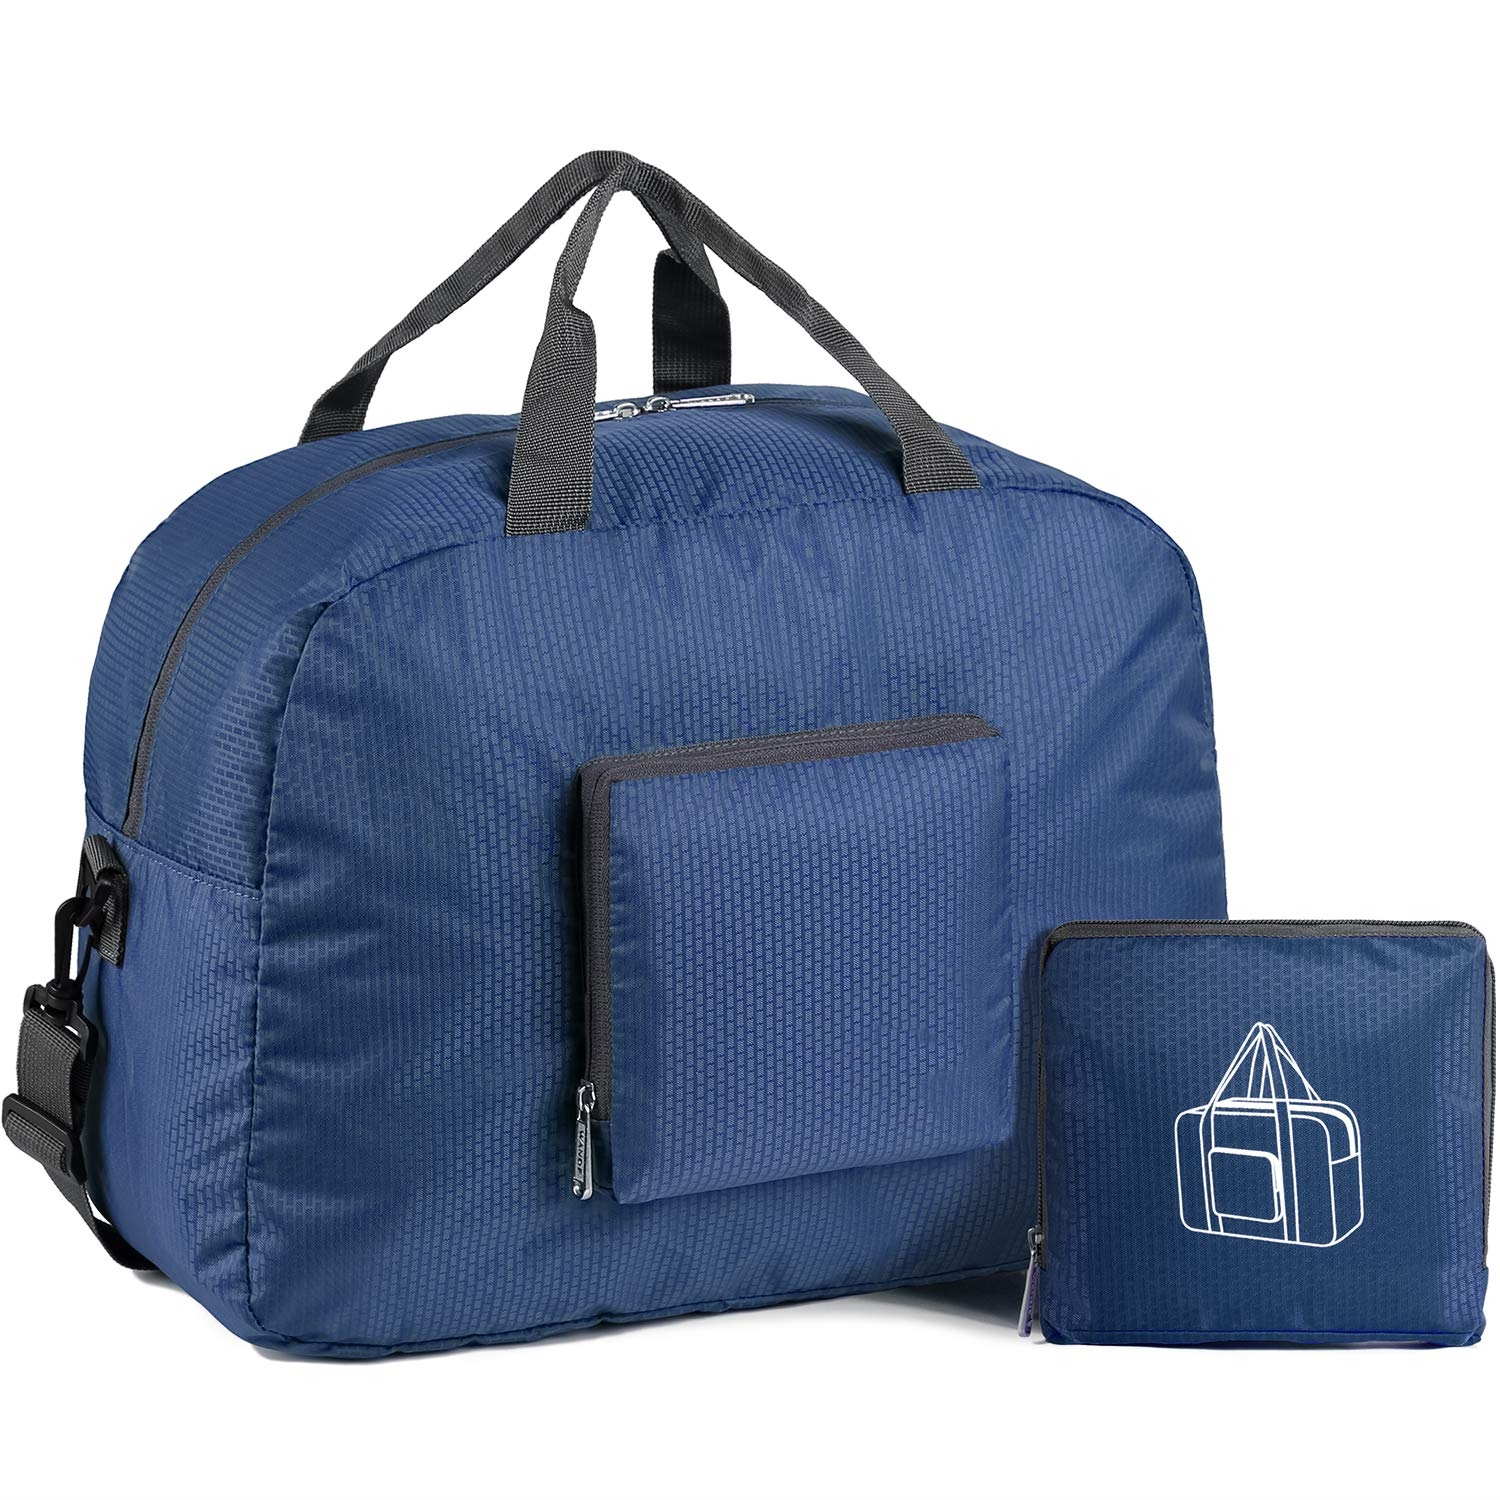 Foldable Travel Duffel Bag Luggage Sports Gym Water Resistant Nylon